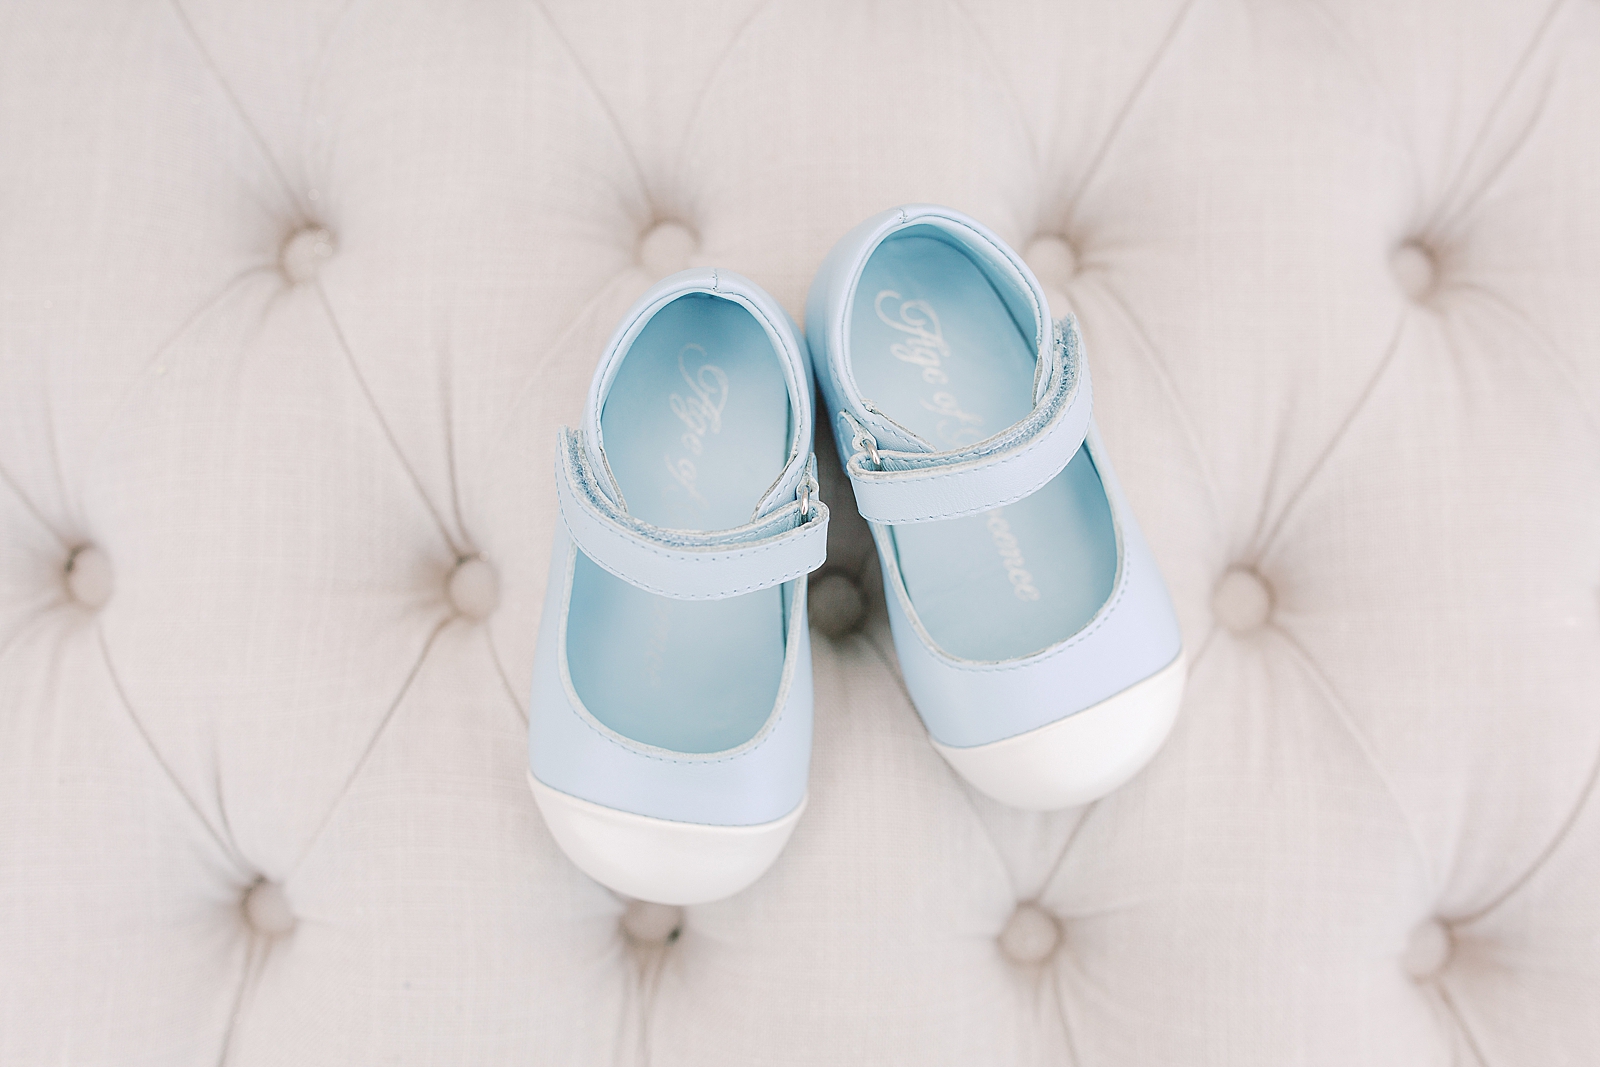 Chateau Elan Blue toddler shoes Photo